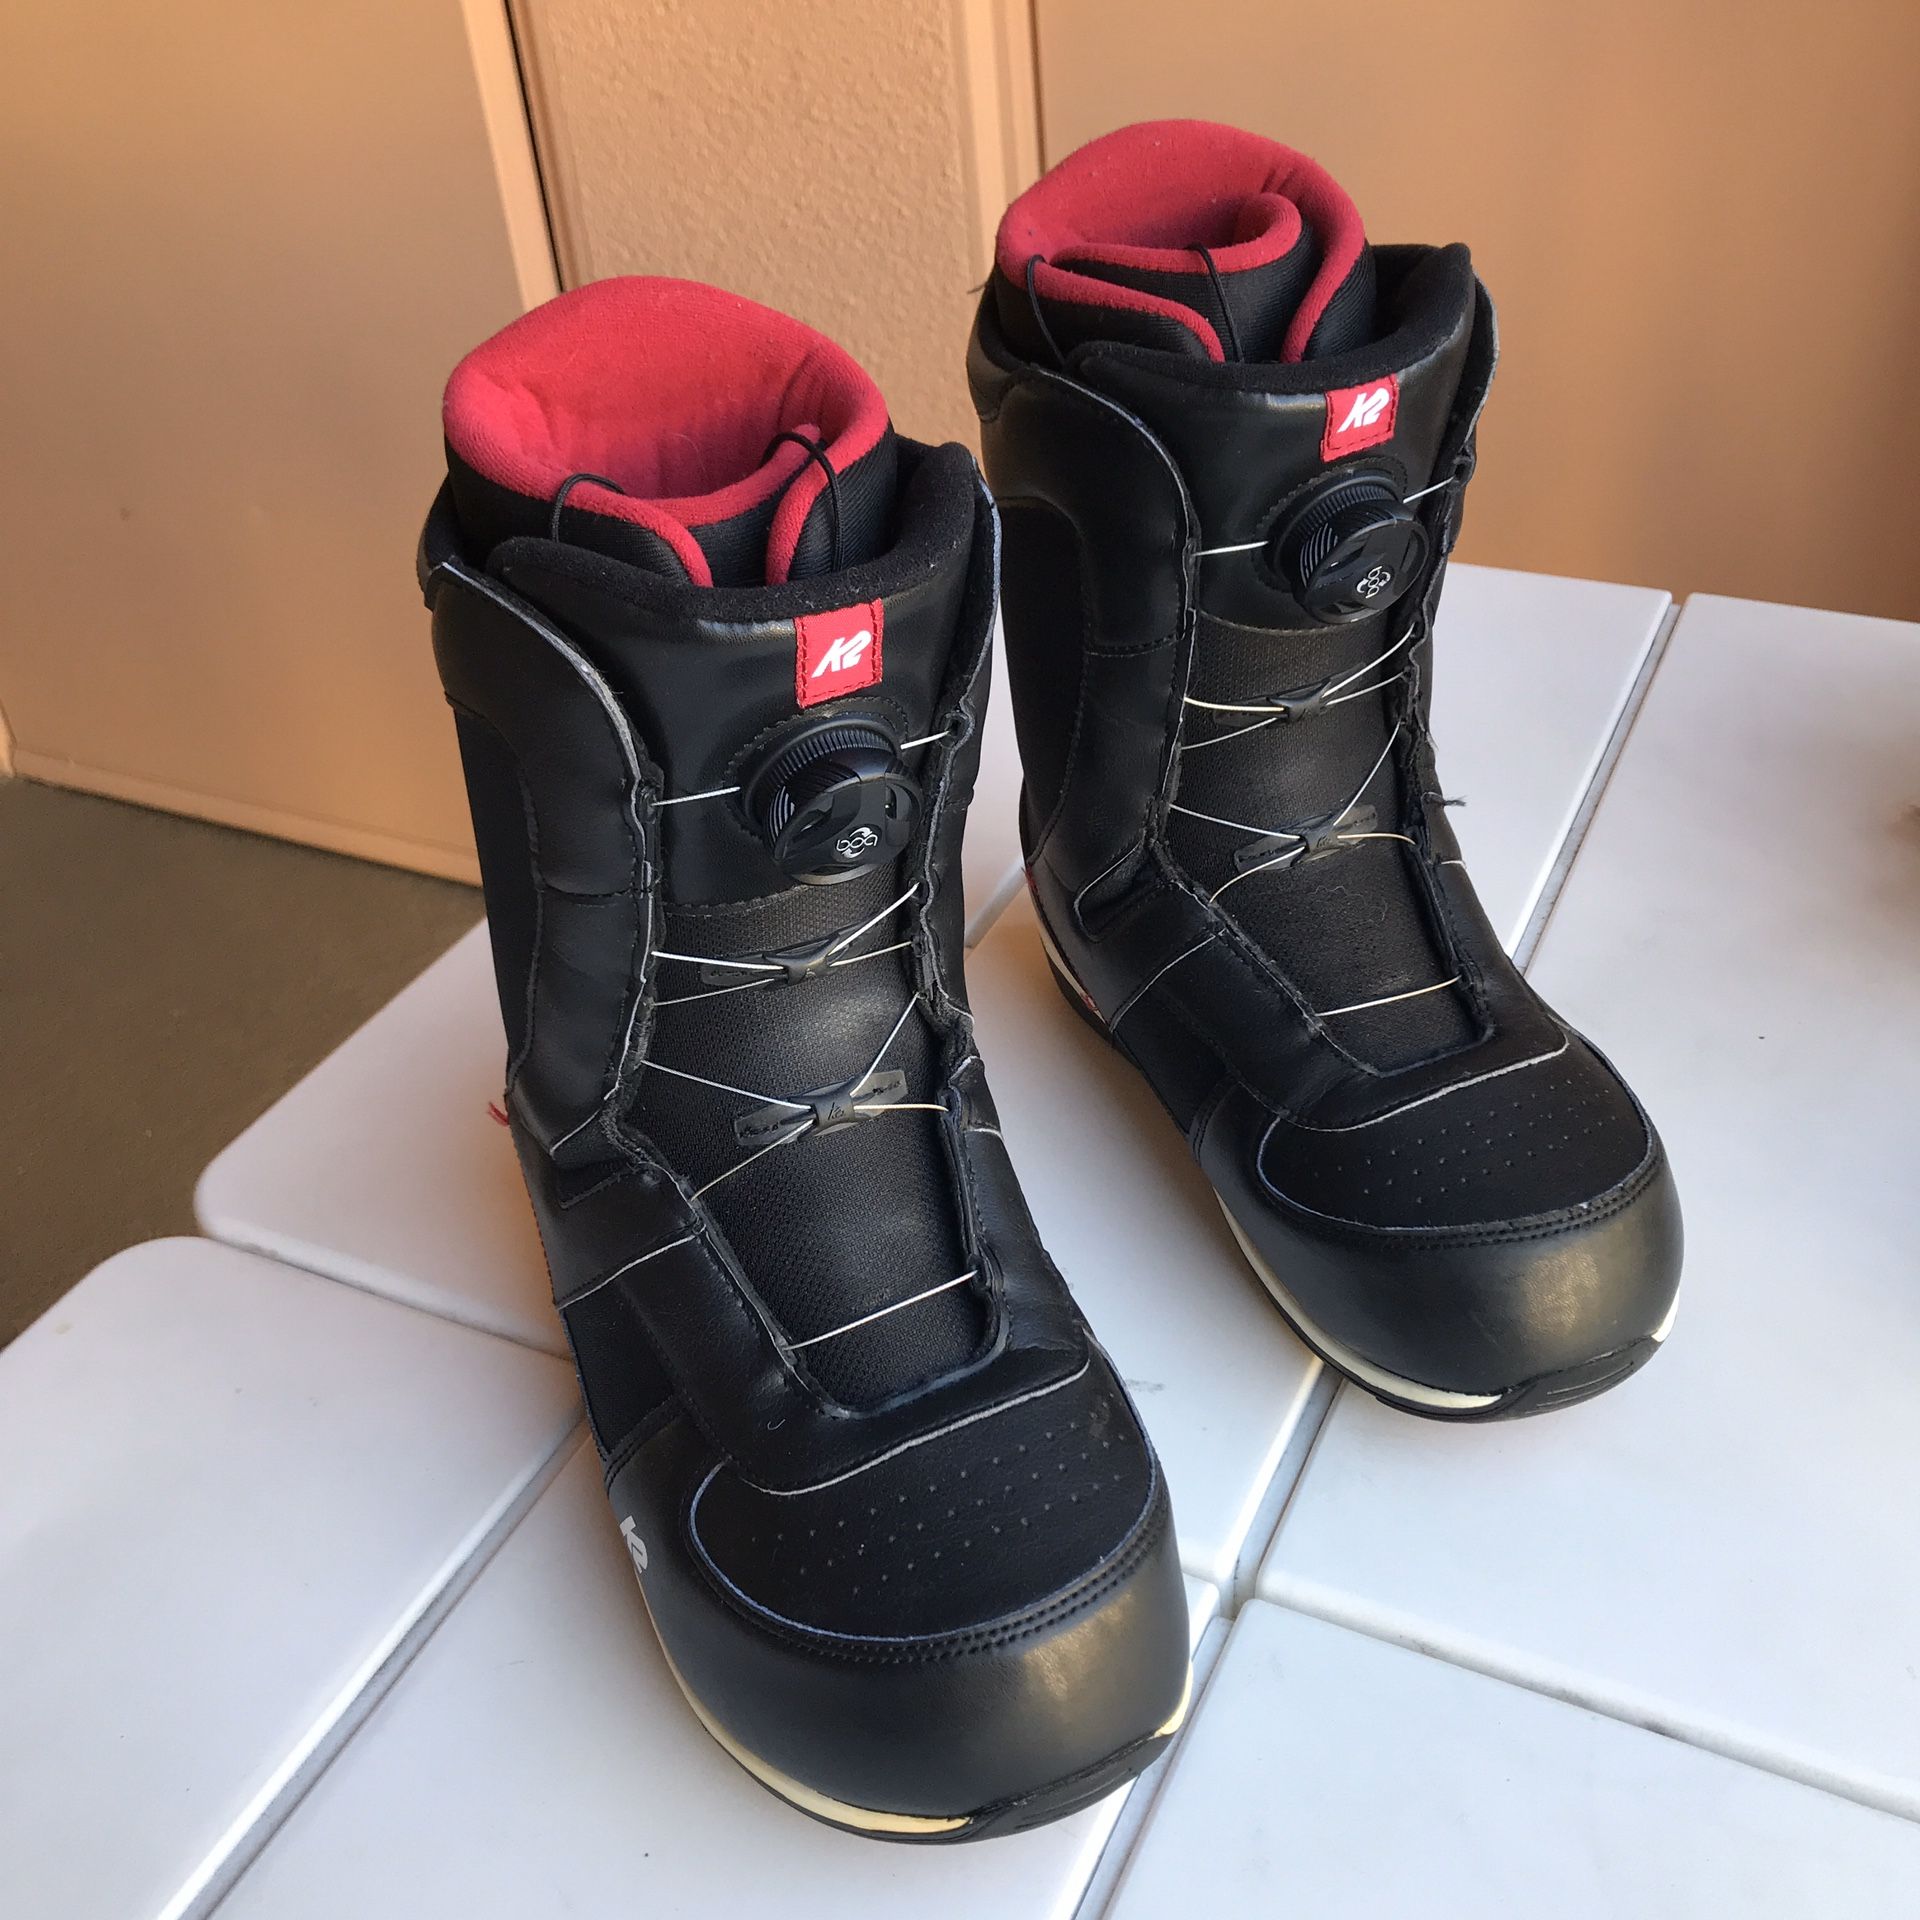 Snowboard boots size 9 - K2 - Boa - Men’s